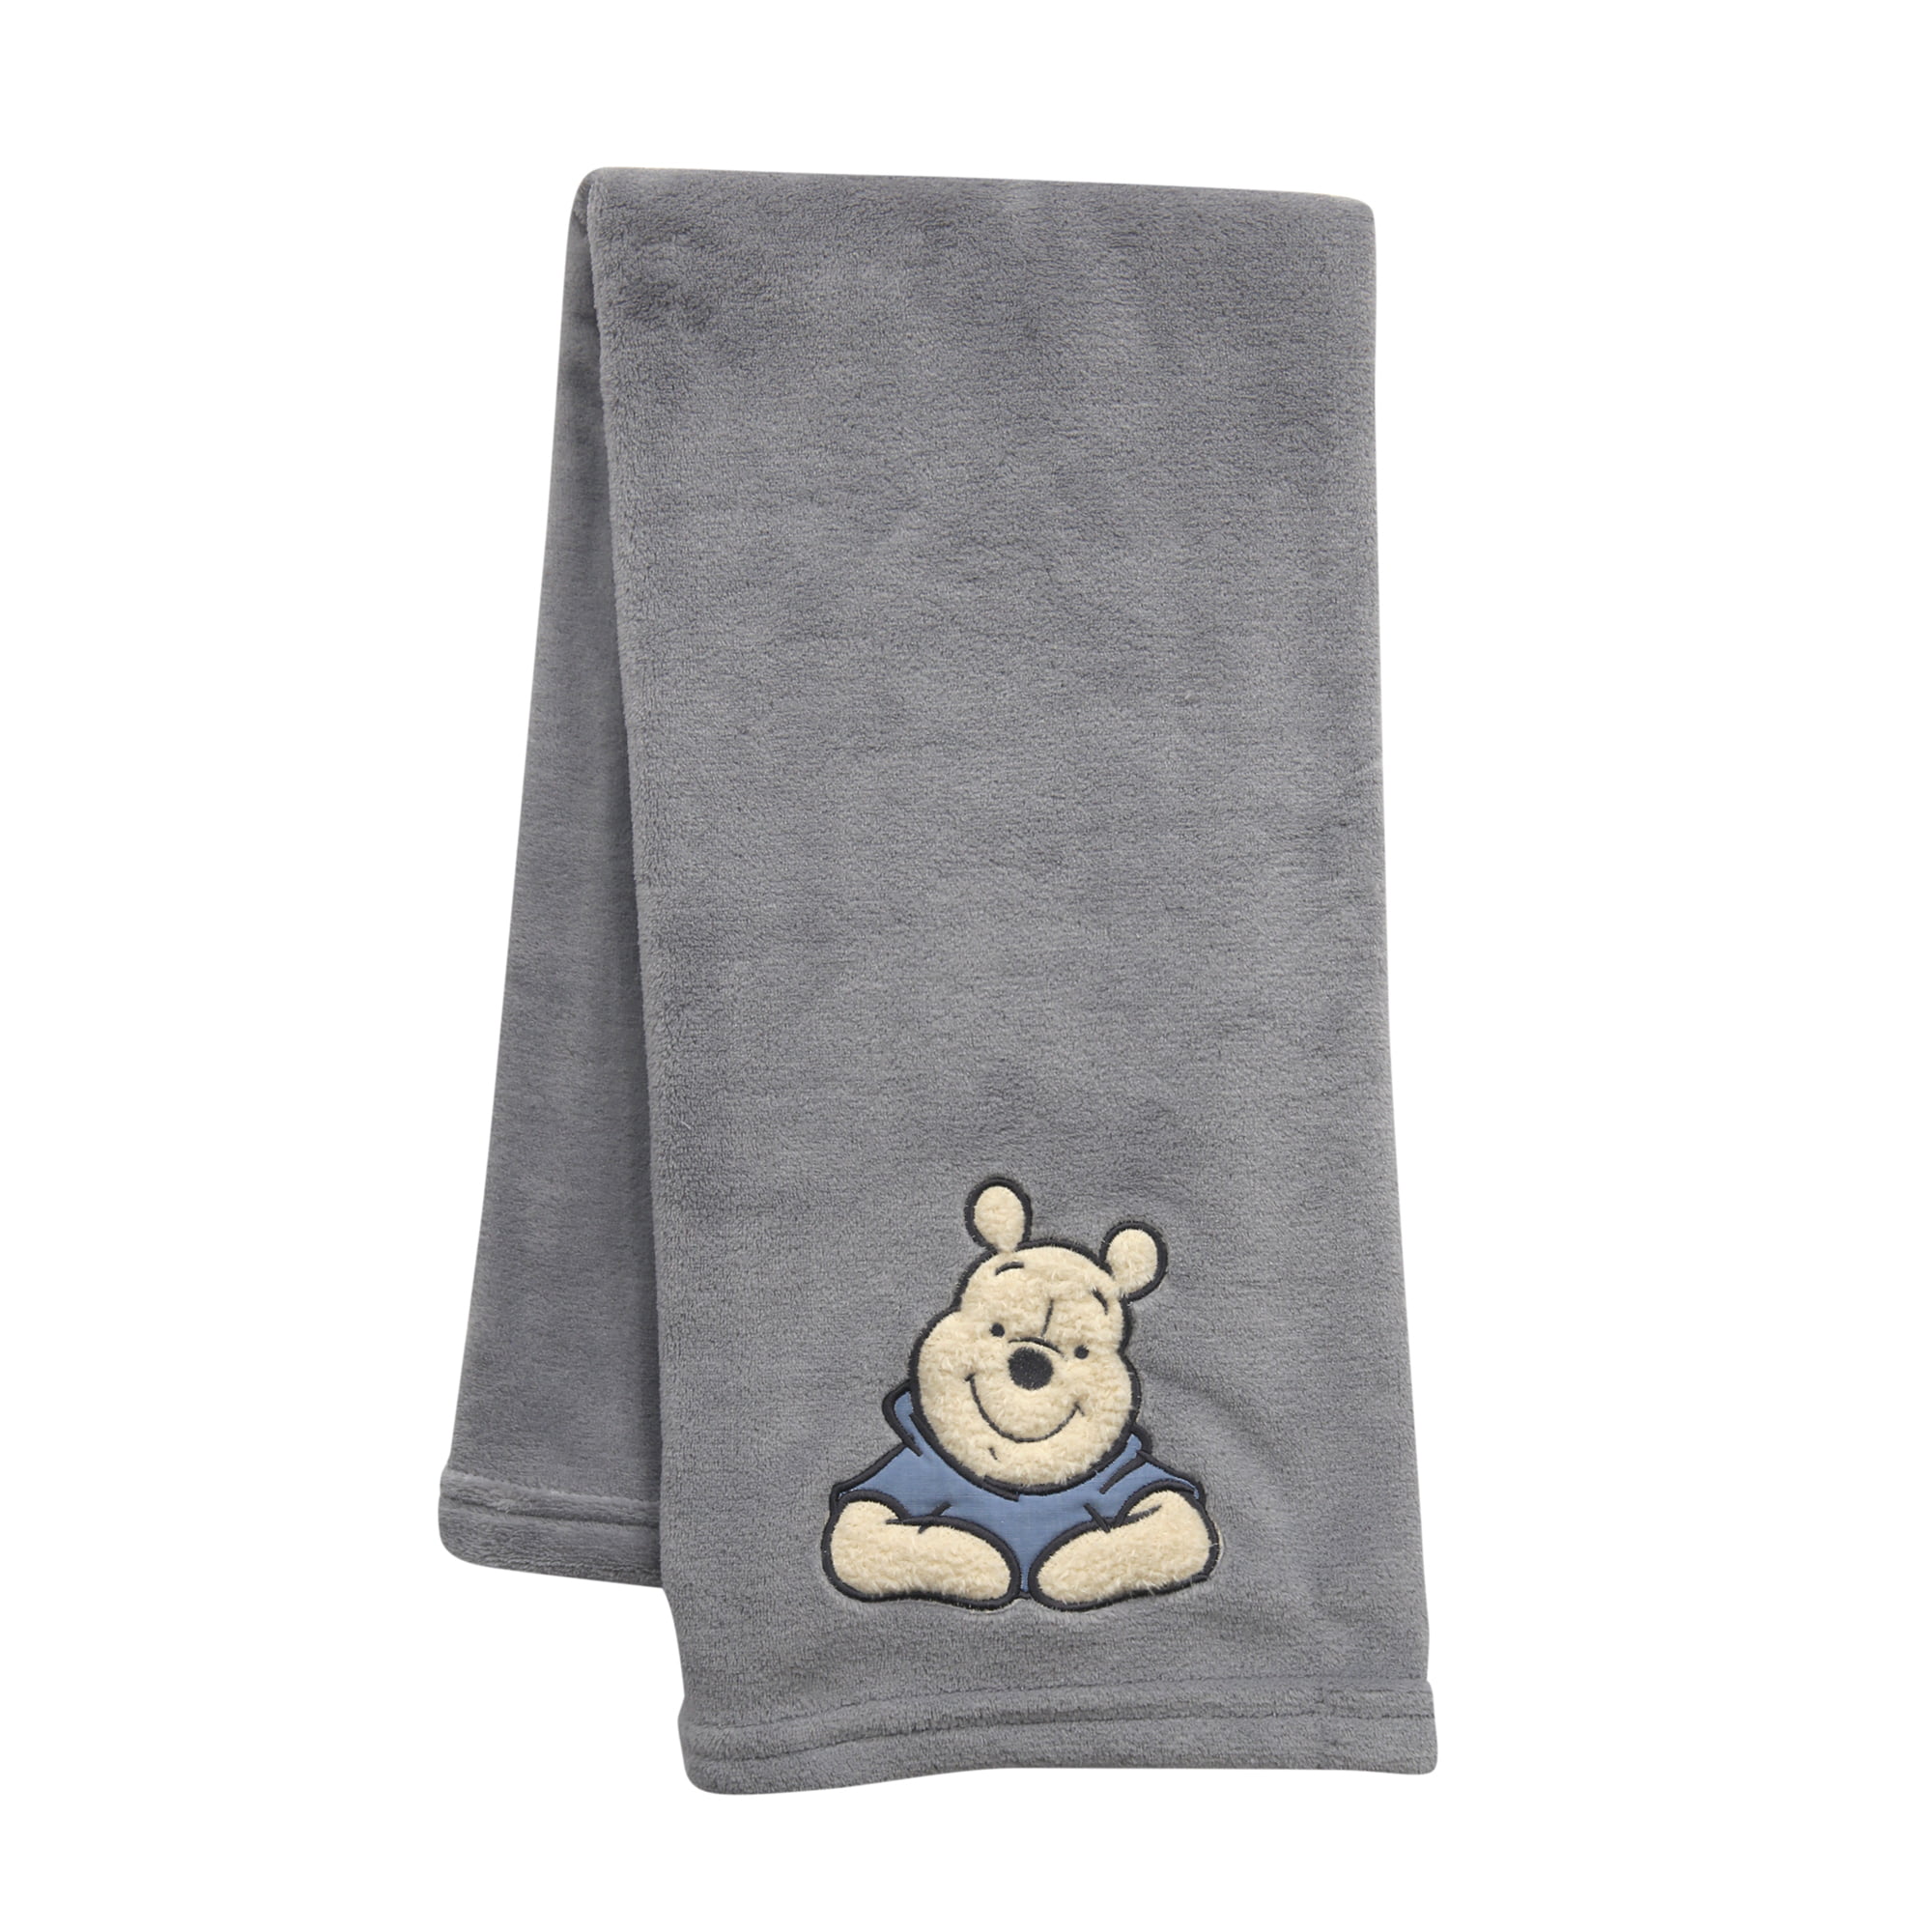 Luxurious Extra Soft & Warm Baby Single Blanket Throw Teddy Bear Design Boy Girl 